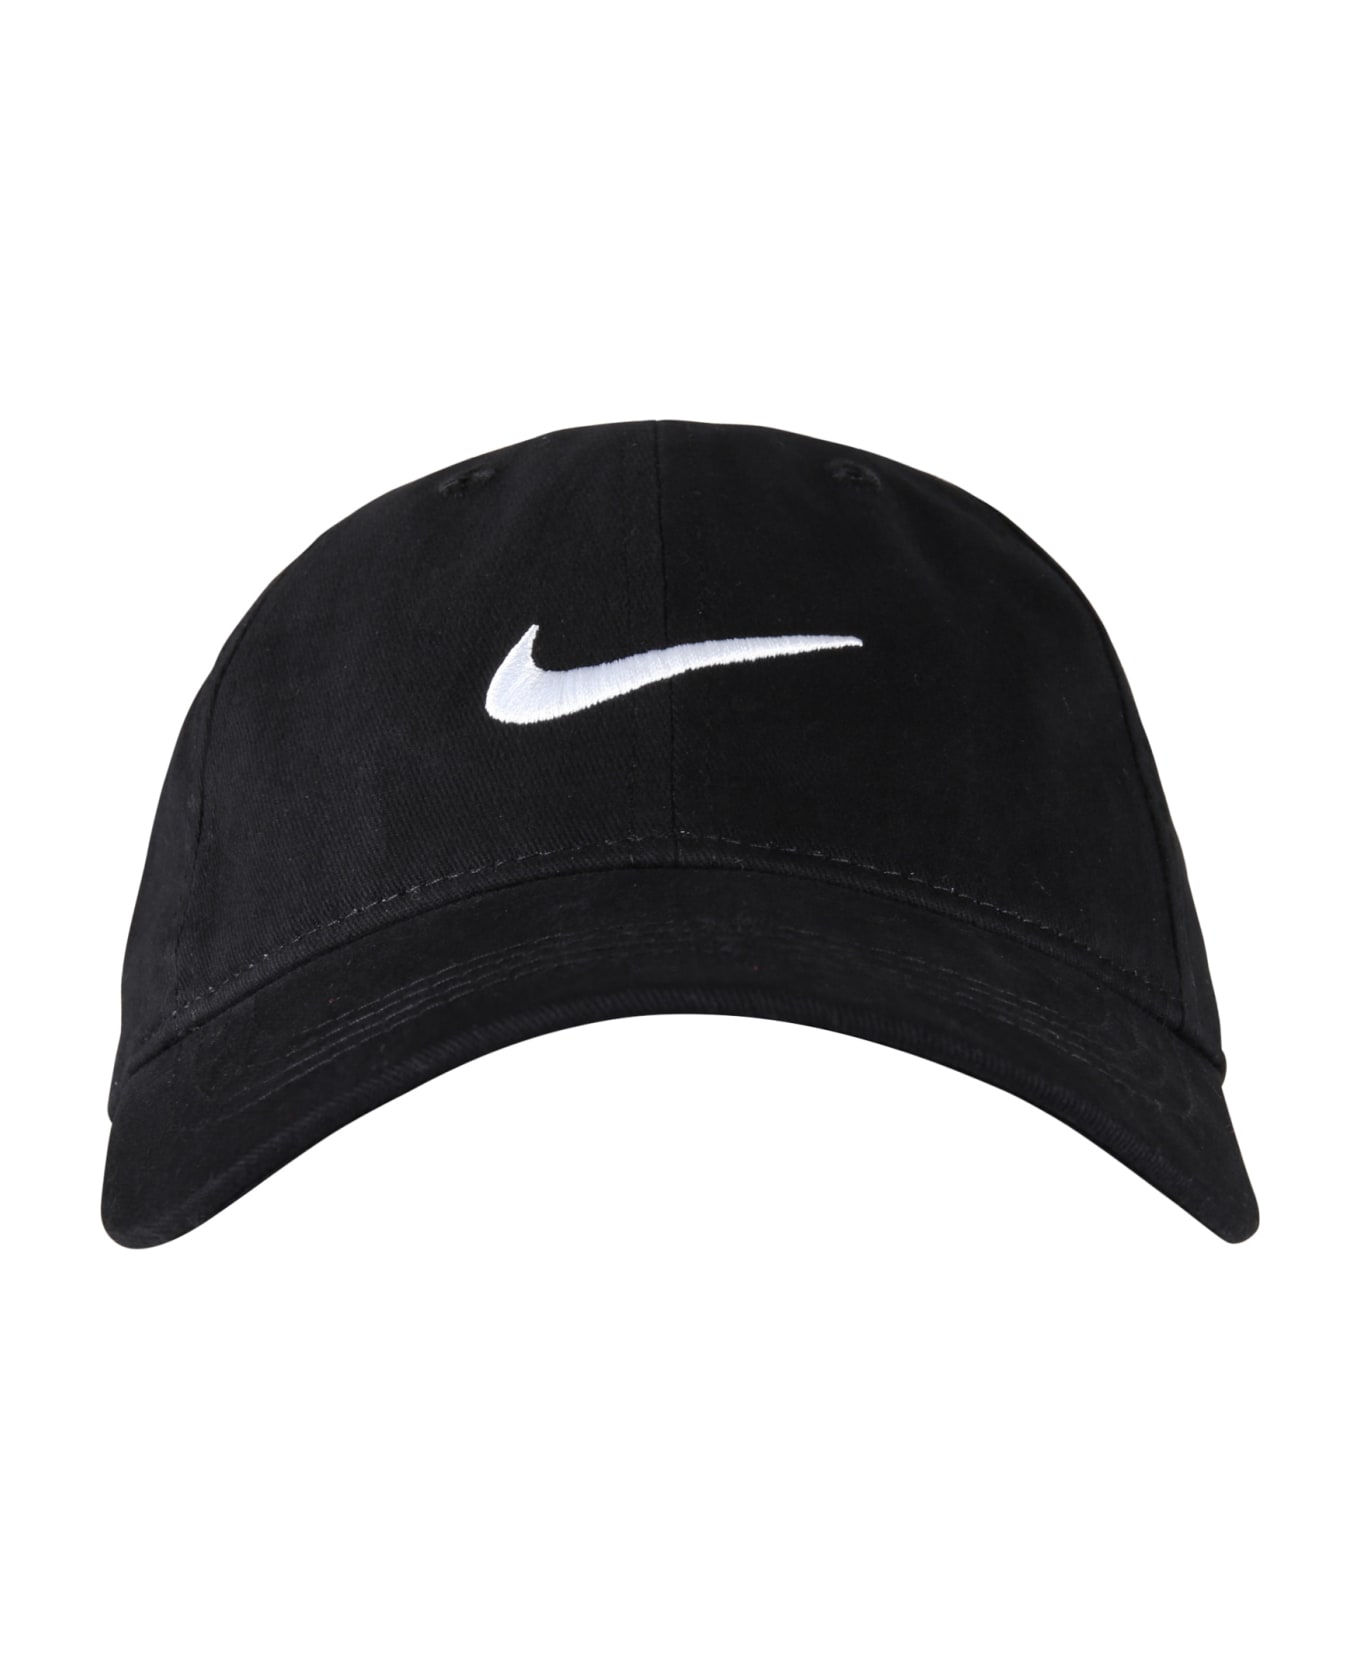 Nike Black Hat For Kids - Black